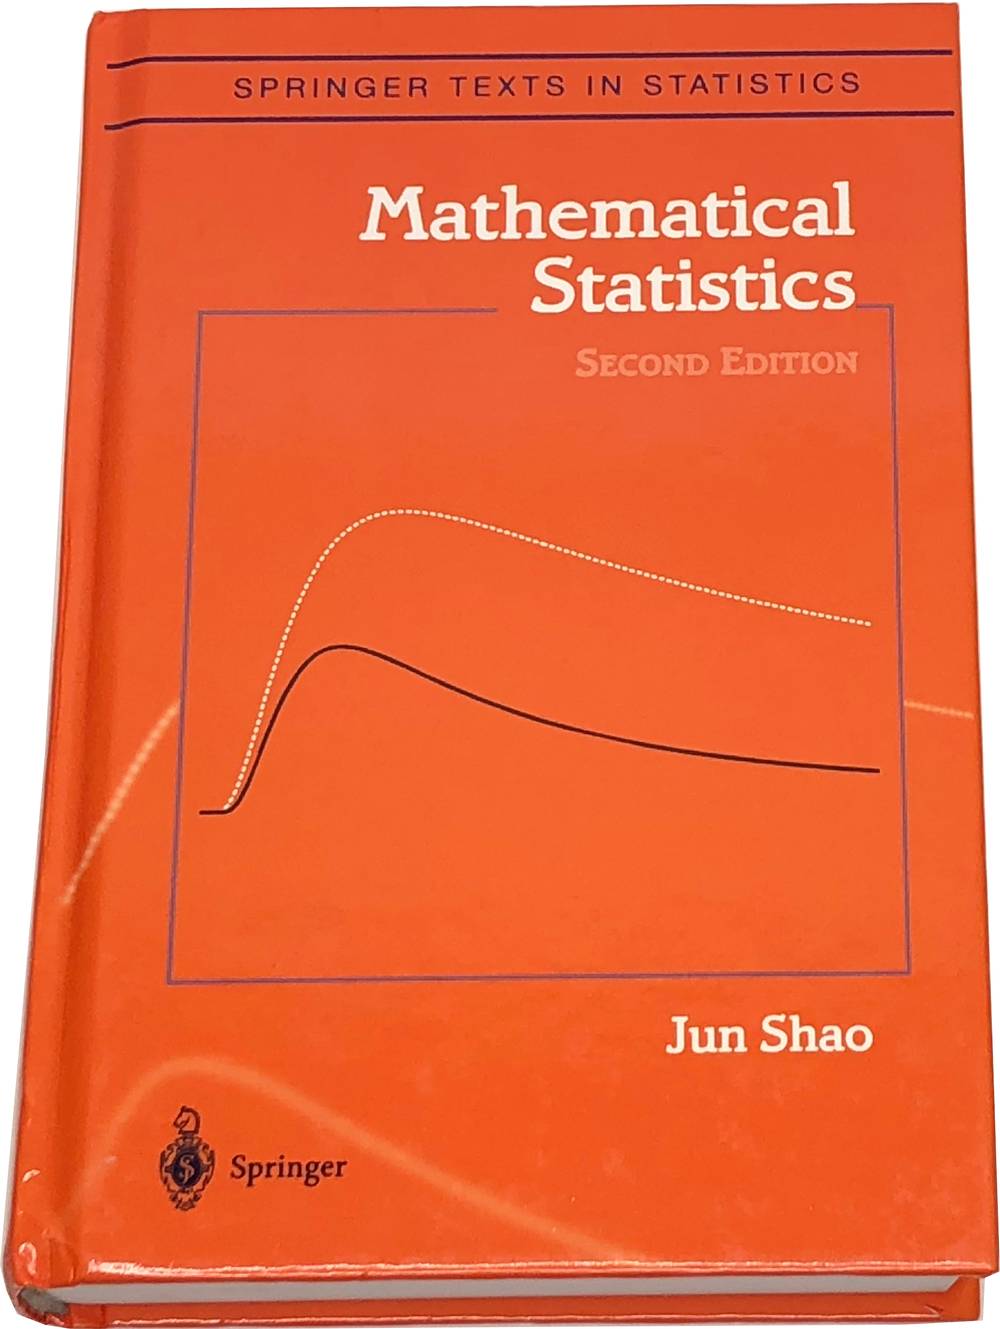 Book image of Mathematical Statistics.